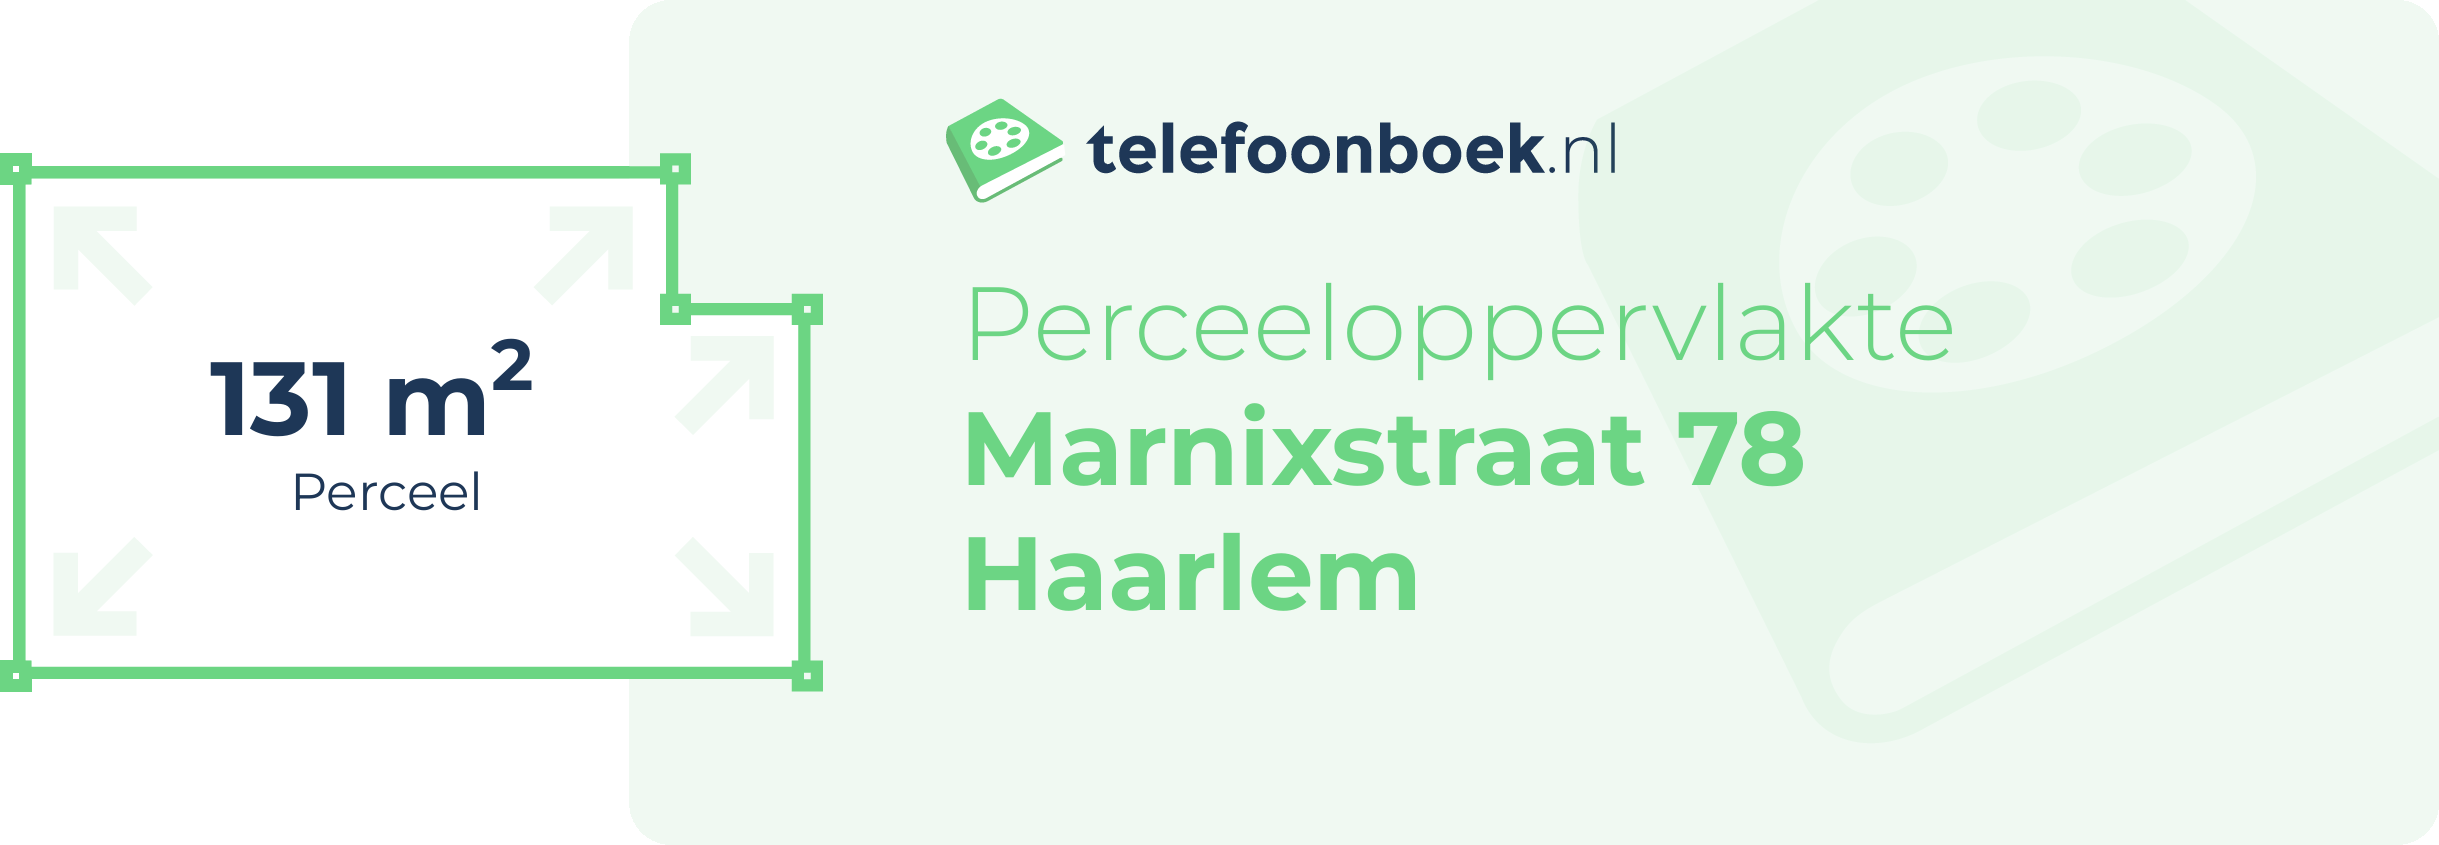 Perceeloppervlakte Marnixstraat 78 Haarlem